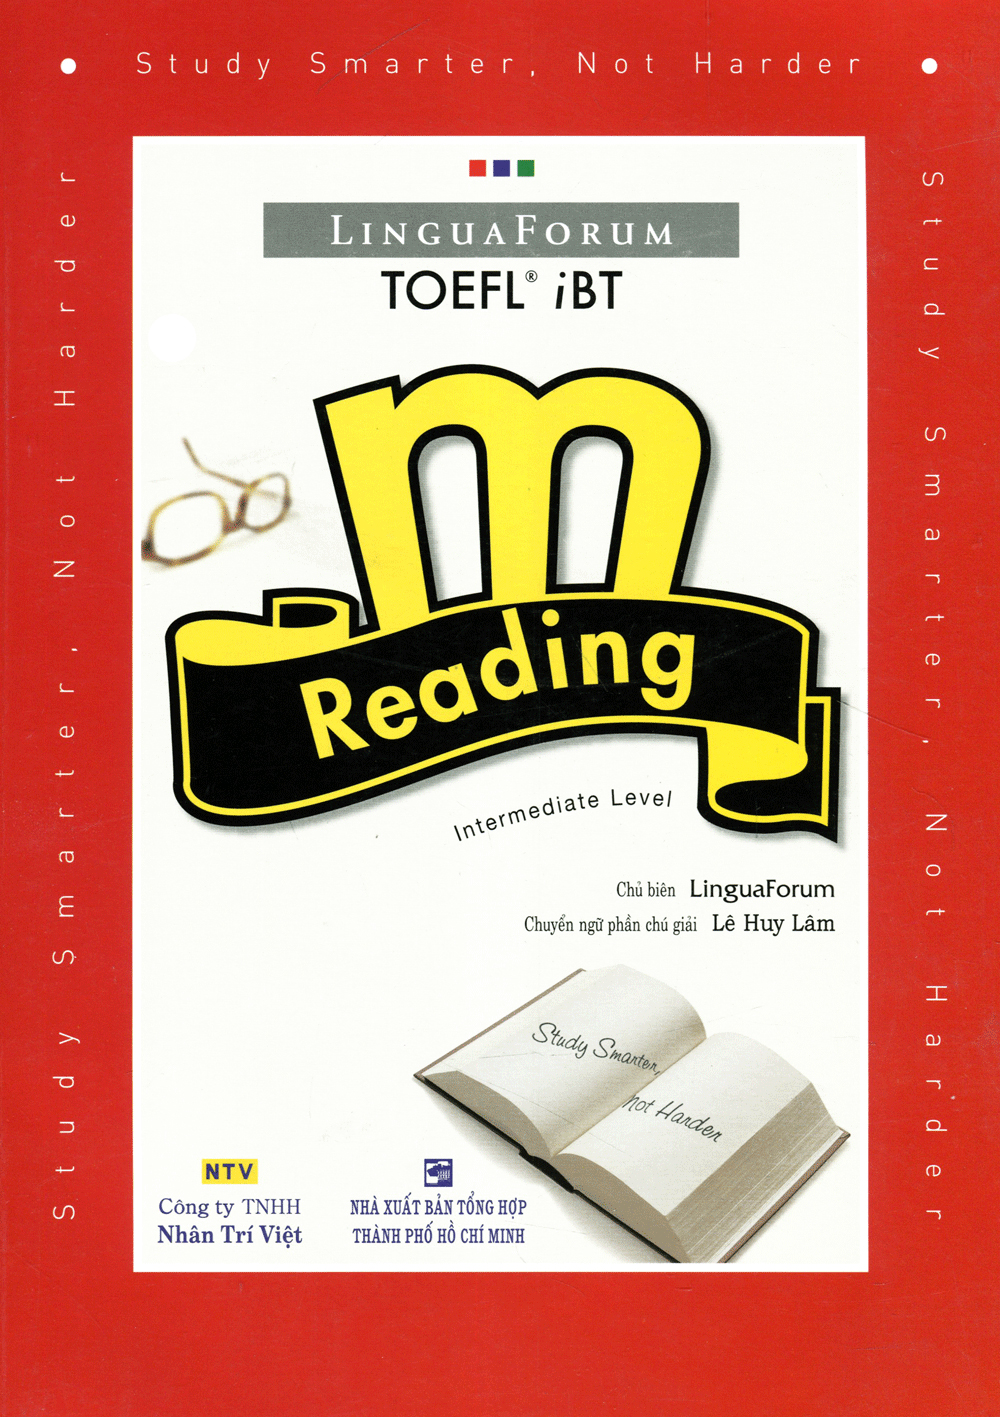 TOEFL iBT M Reading Intermediate Level PDF